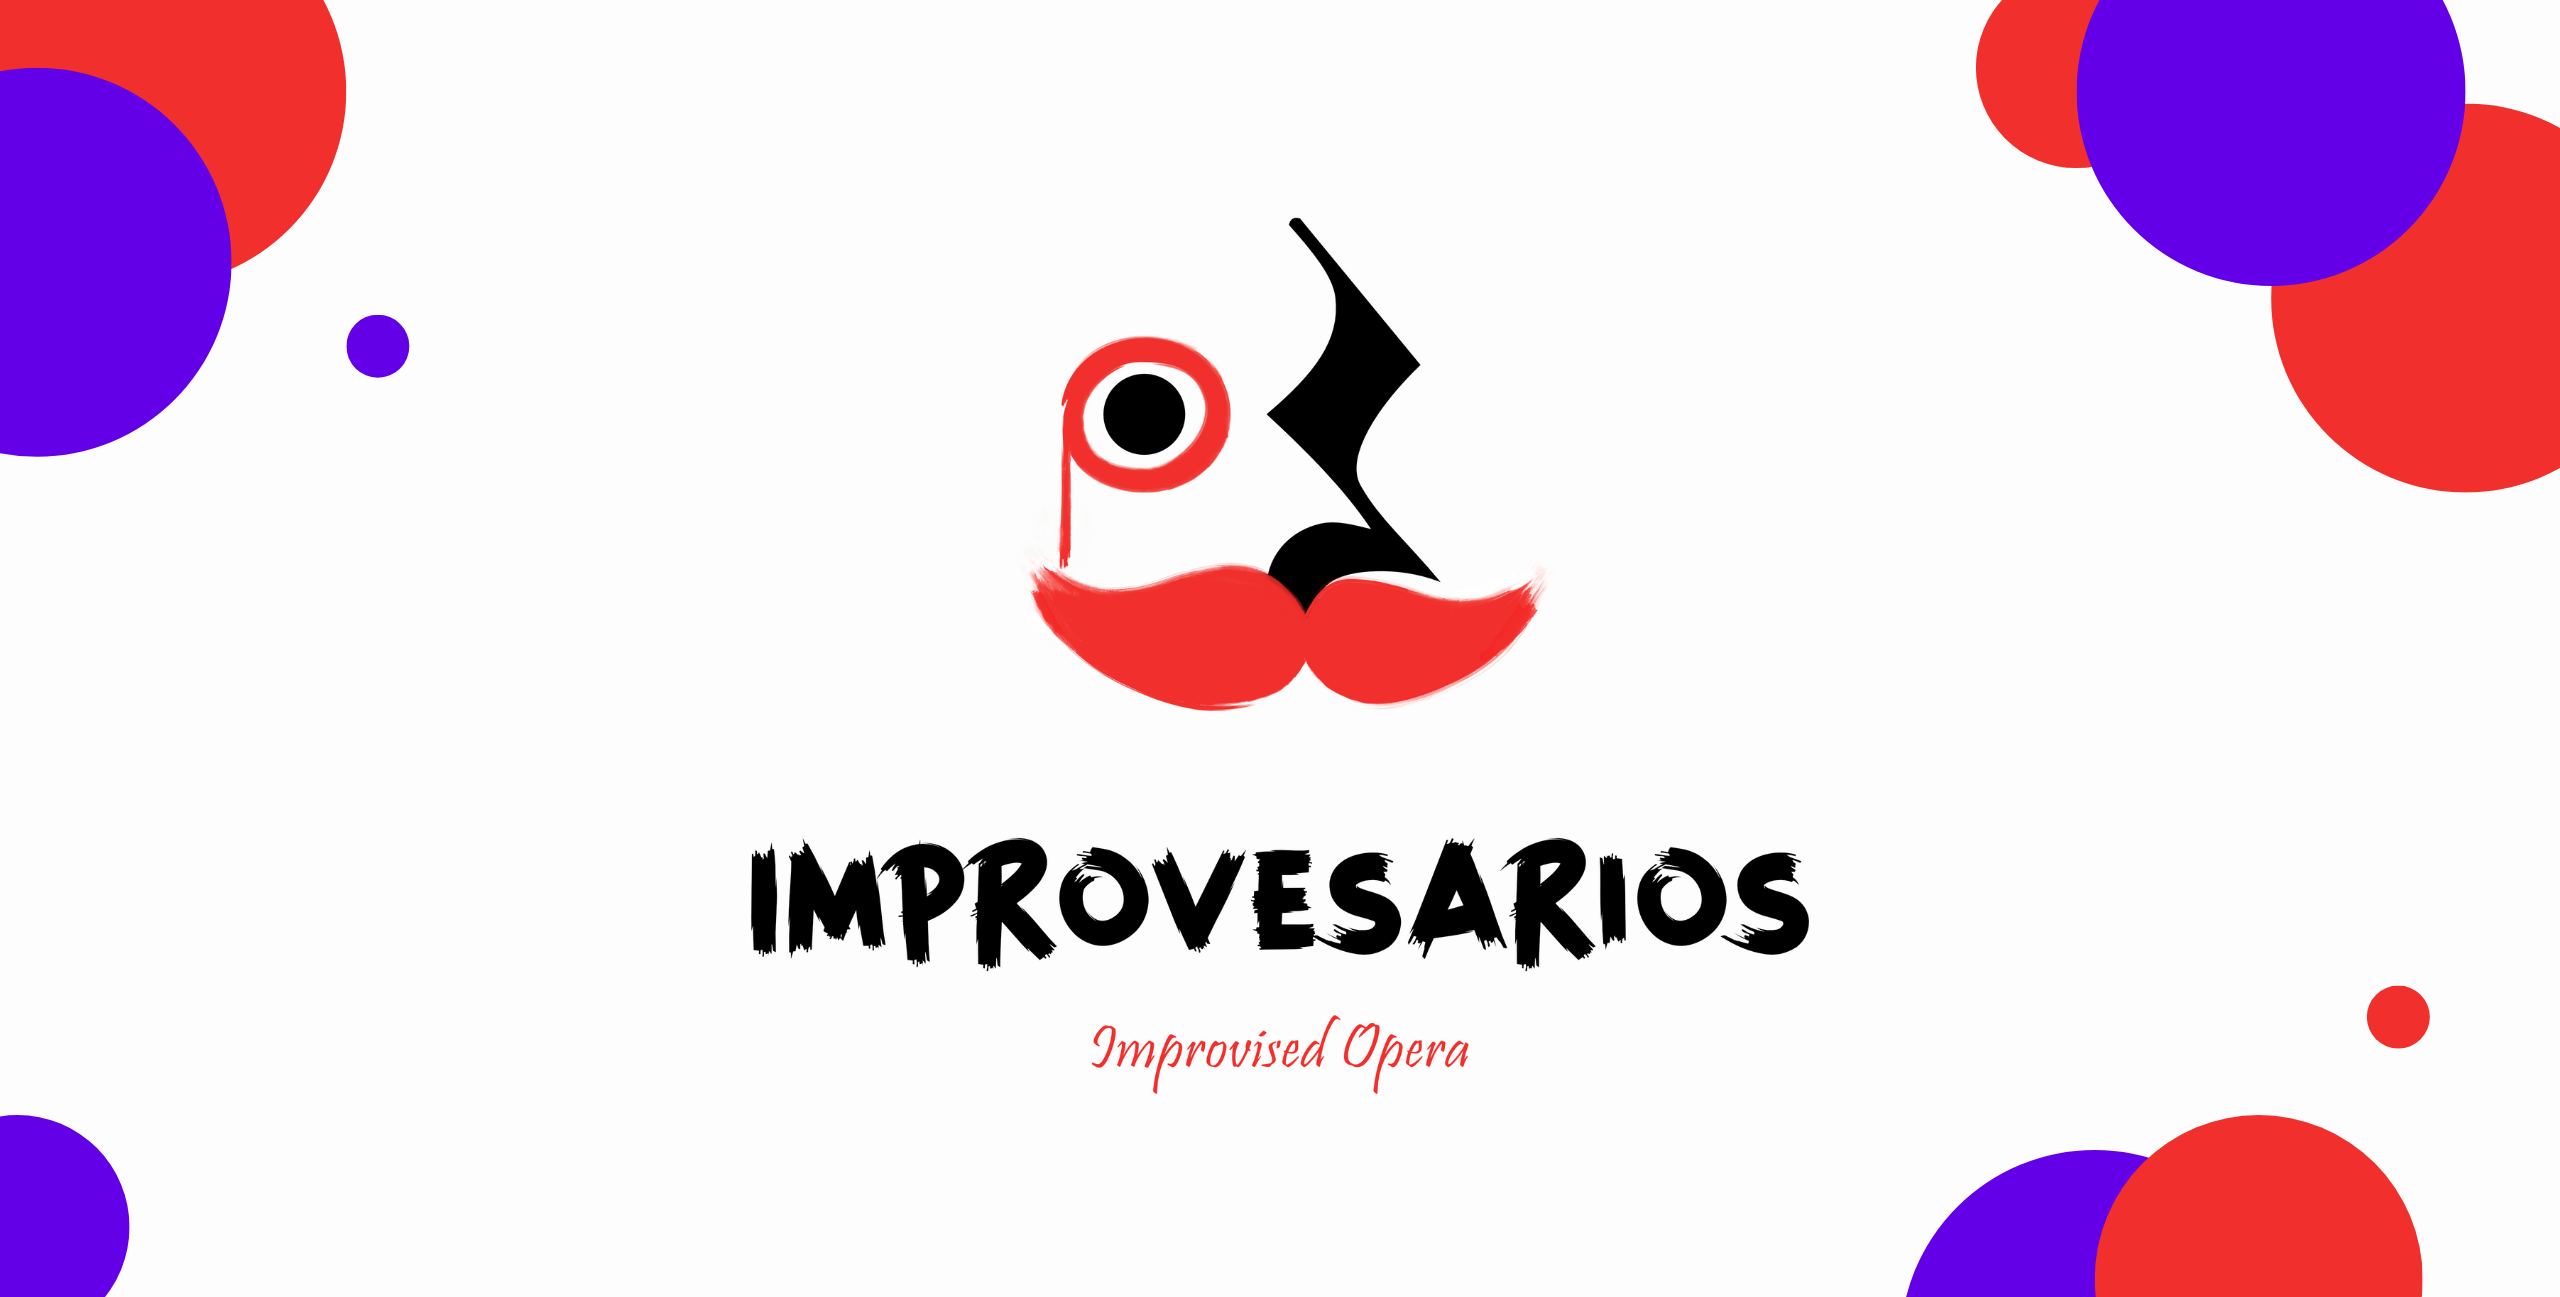 IMPROVESARIOS - An evening of improvised opera